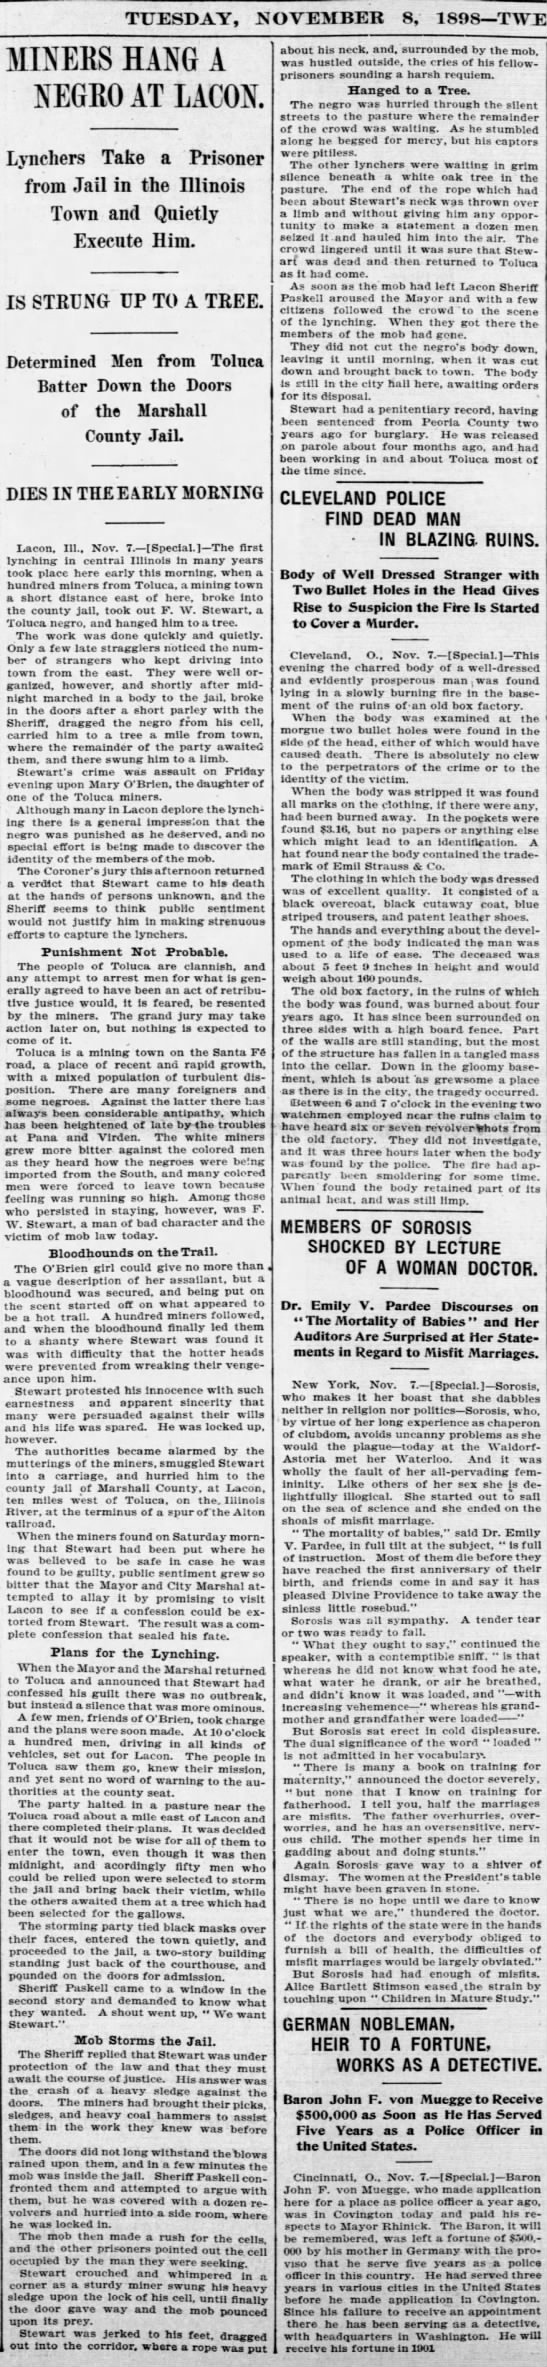 lacon lynching
Chicago daily tribune 11-8-1898 - 